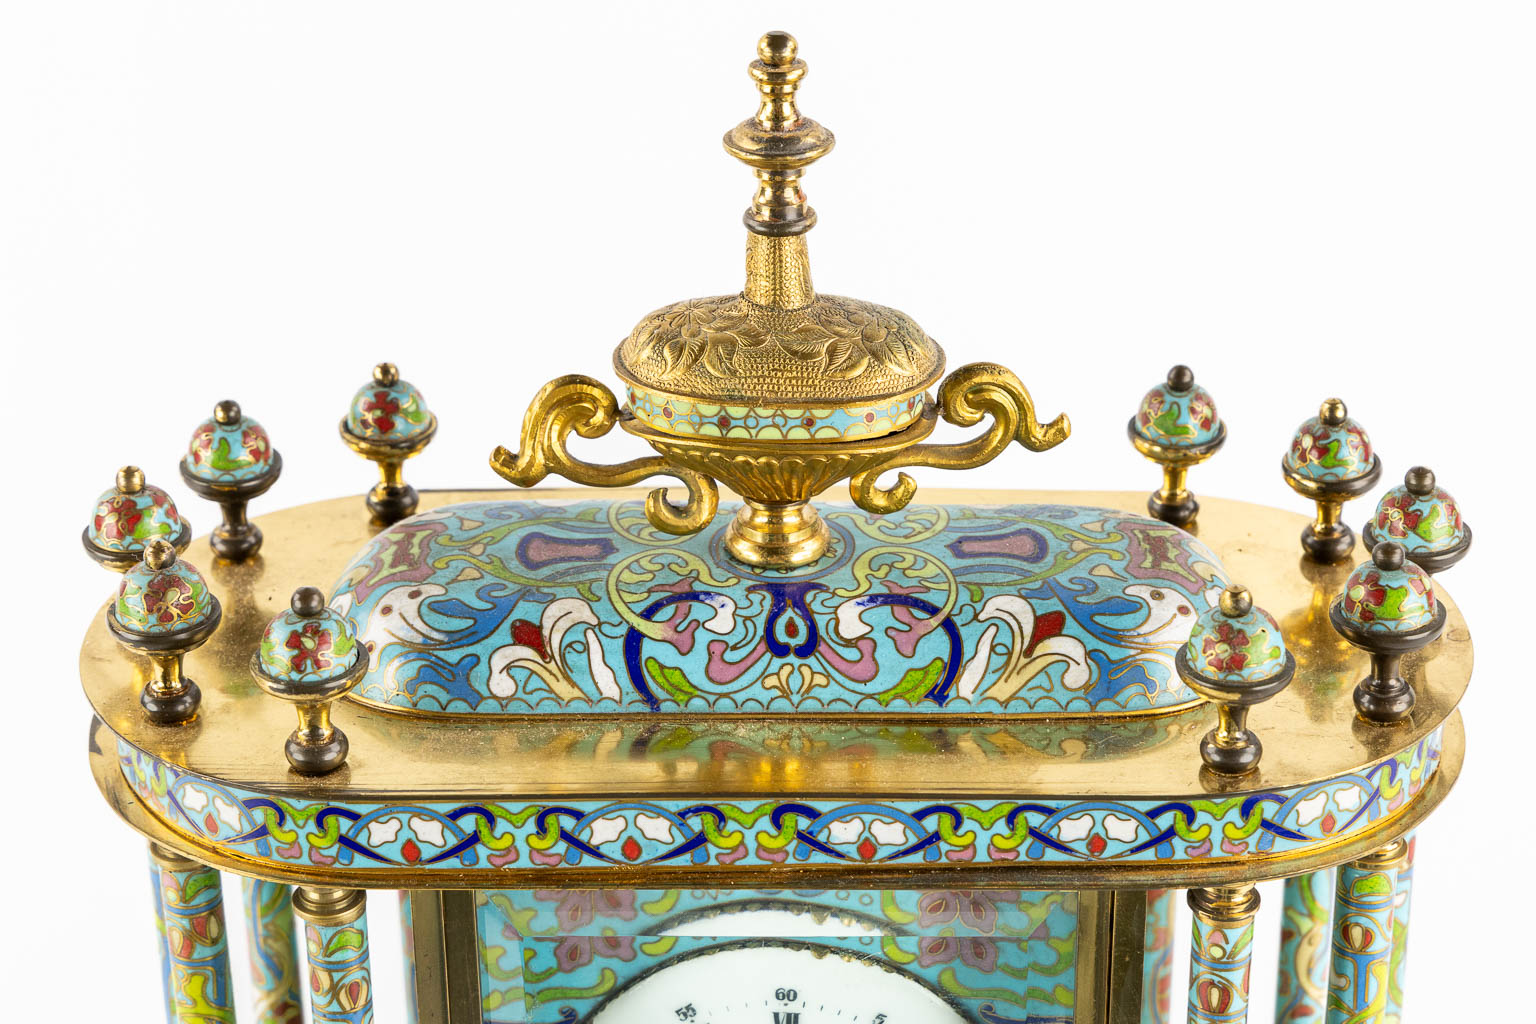 A decorative table clock, finished with cloisonné enamel. (L:15 x W:32 x H:46 cm) - Image 8 of 11